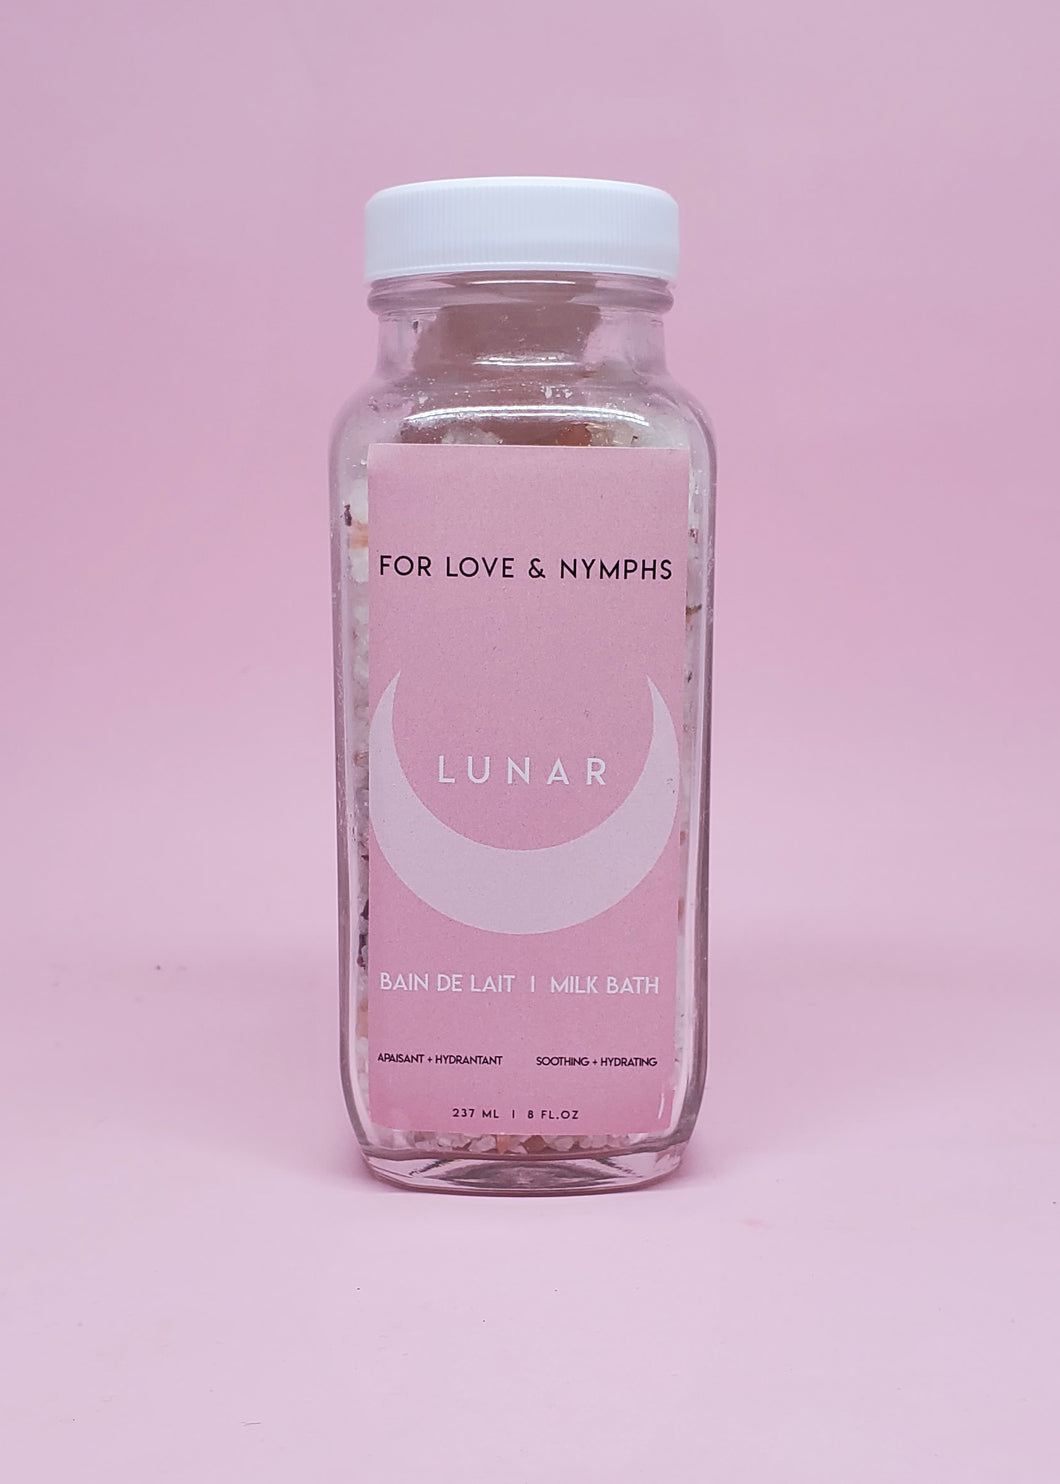 For Love & Nymphs - Lunar Milk Bath